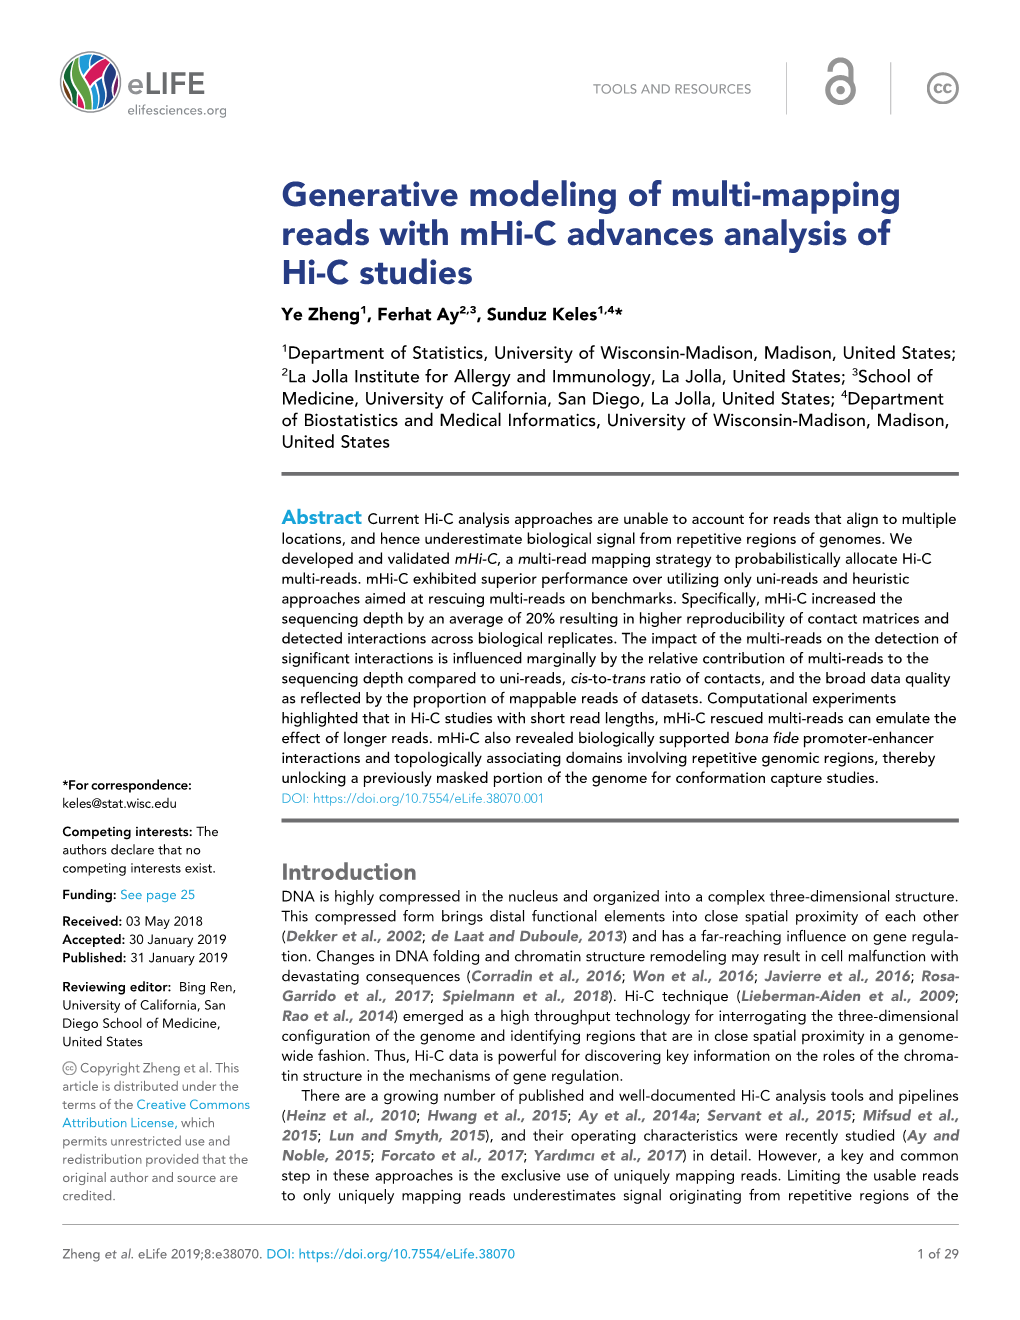 Generative Modeling of Multi-Mapping Reads with Mhi-C Advances Analysis of Hi-C Studies Ye Zheng1, Ferhat Ay2,3, Sunduz Keles1,4*